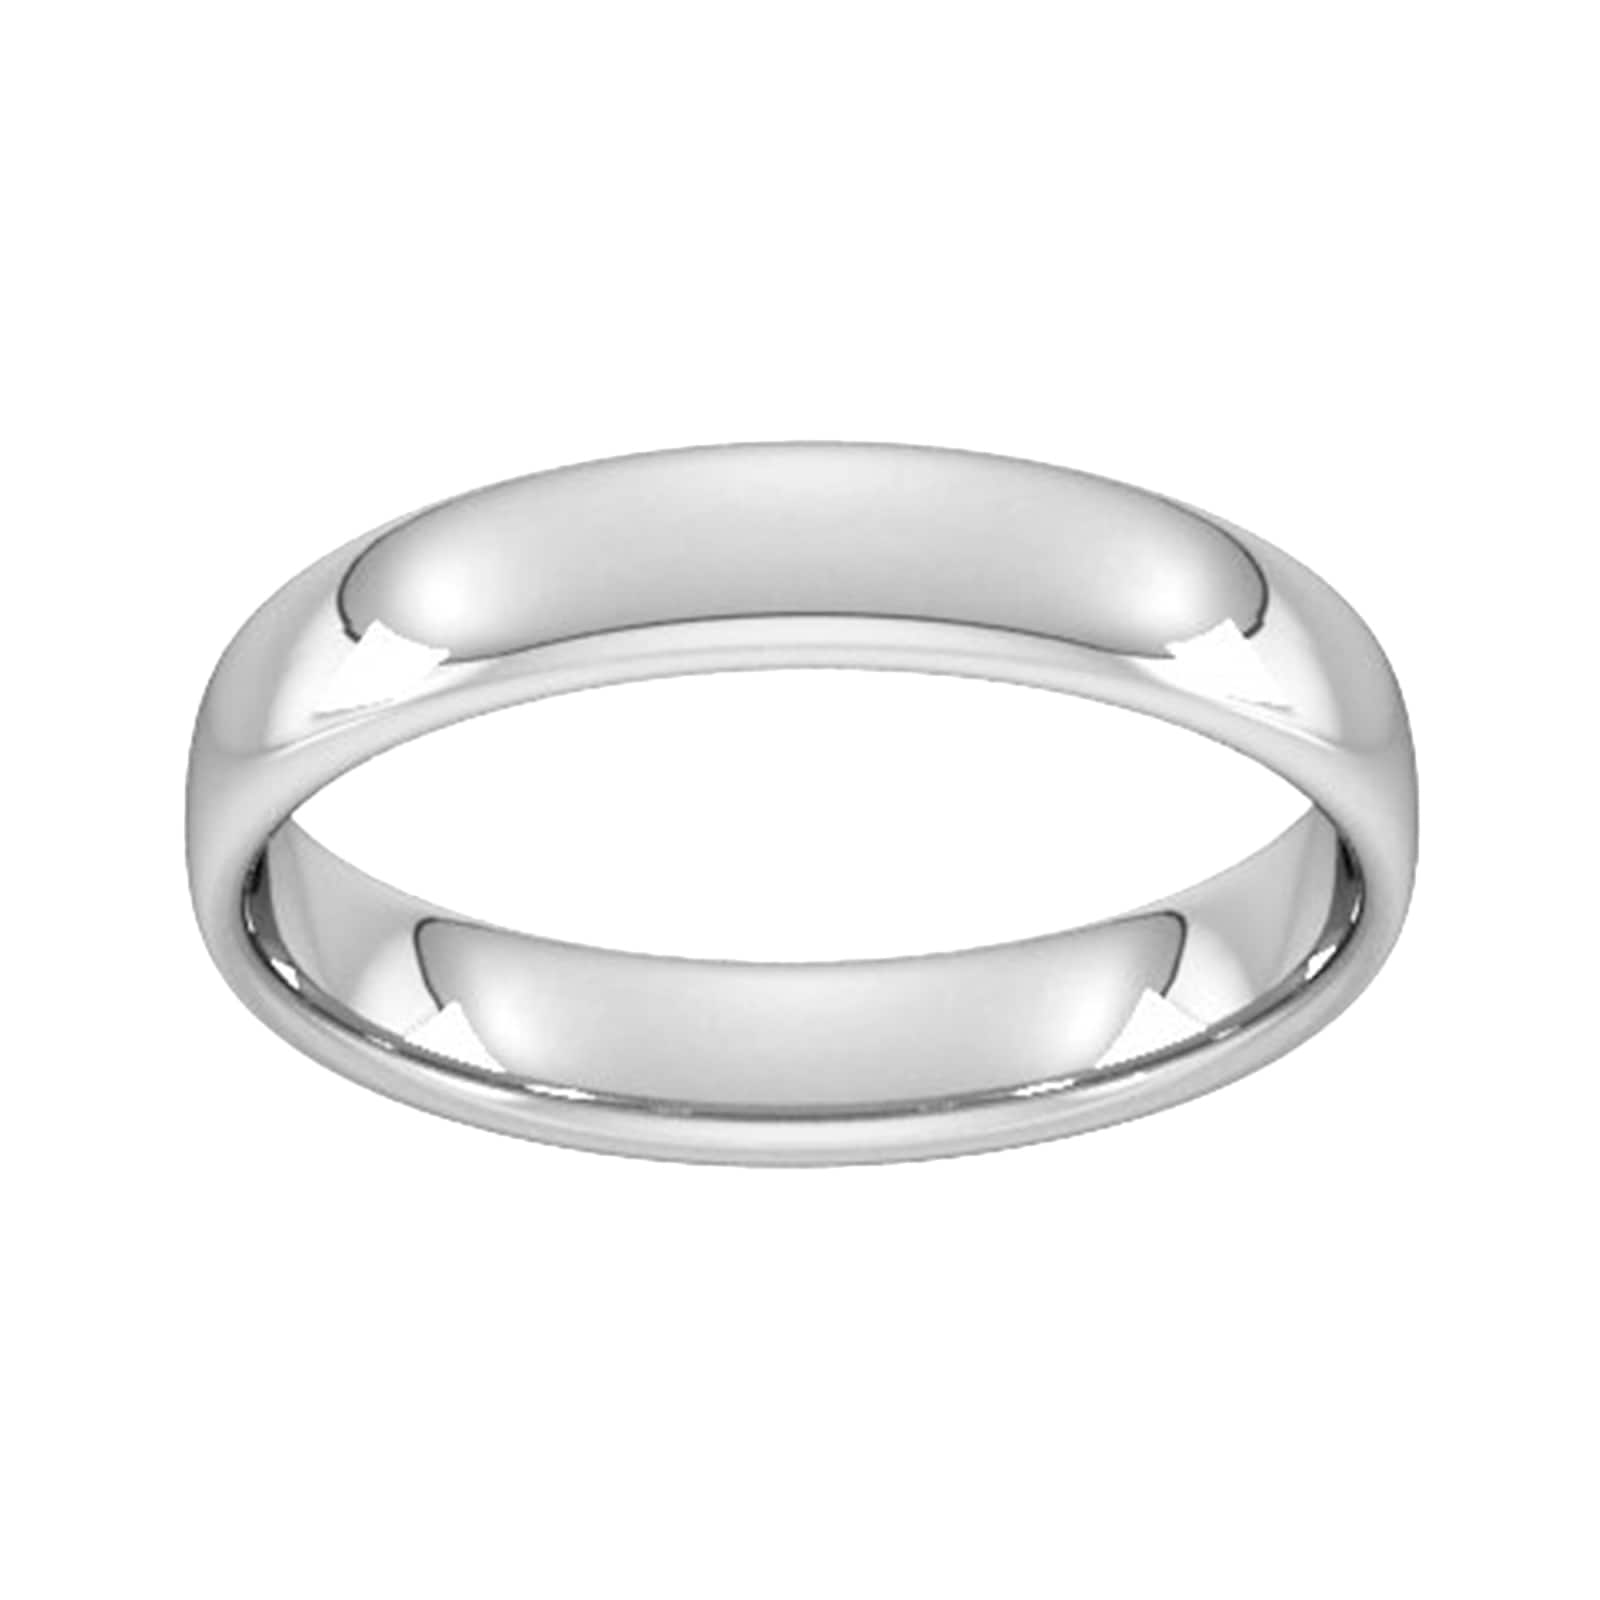 4mm Slight Court Standard Wedding Ring In Sterling Silver - Ring Size Z